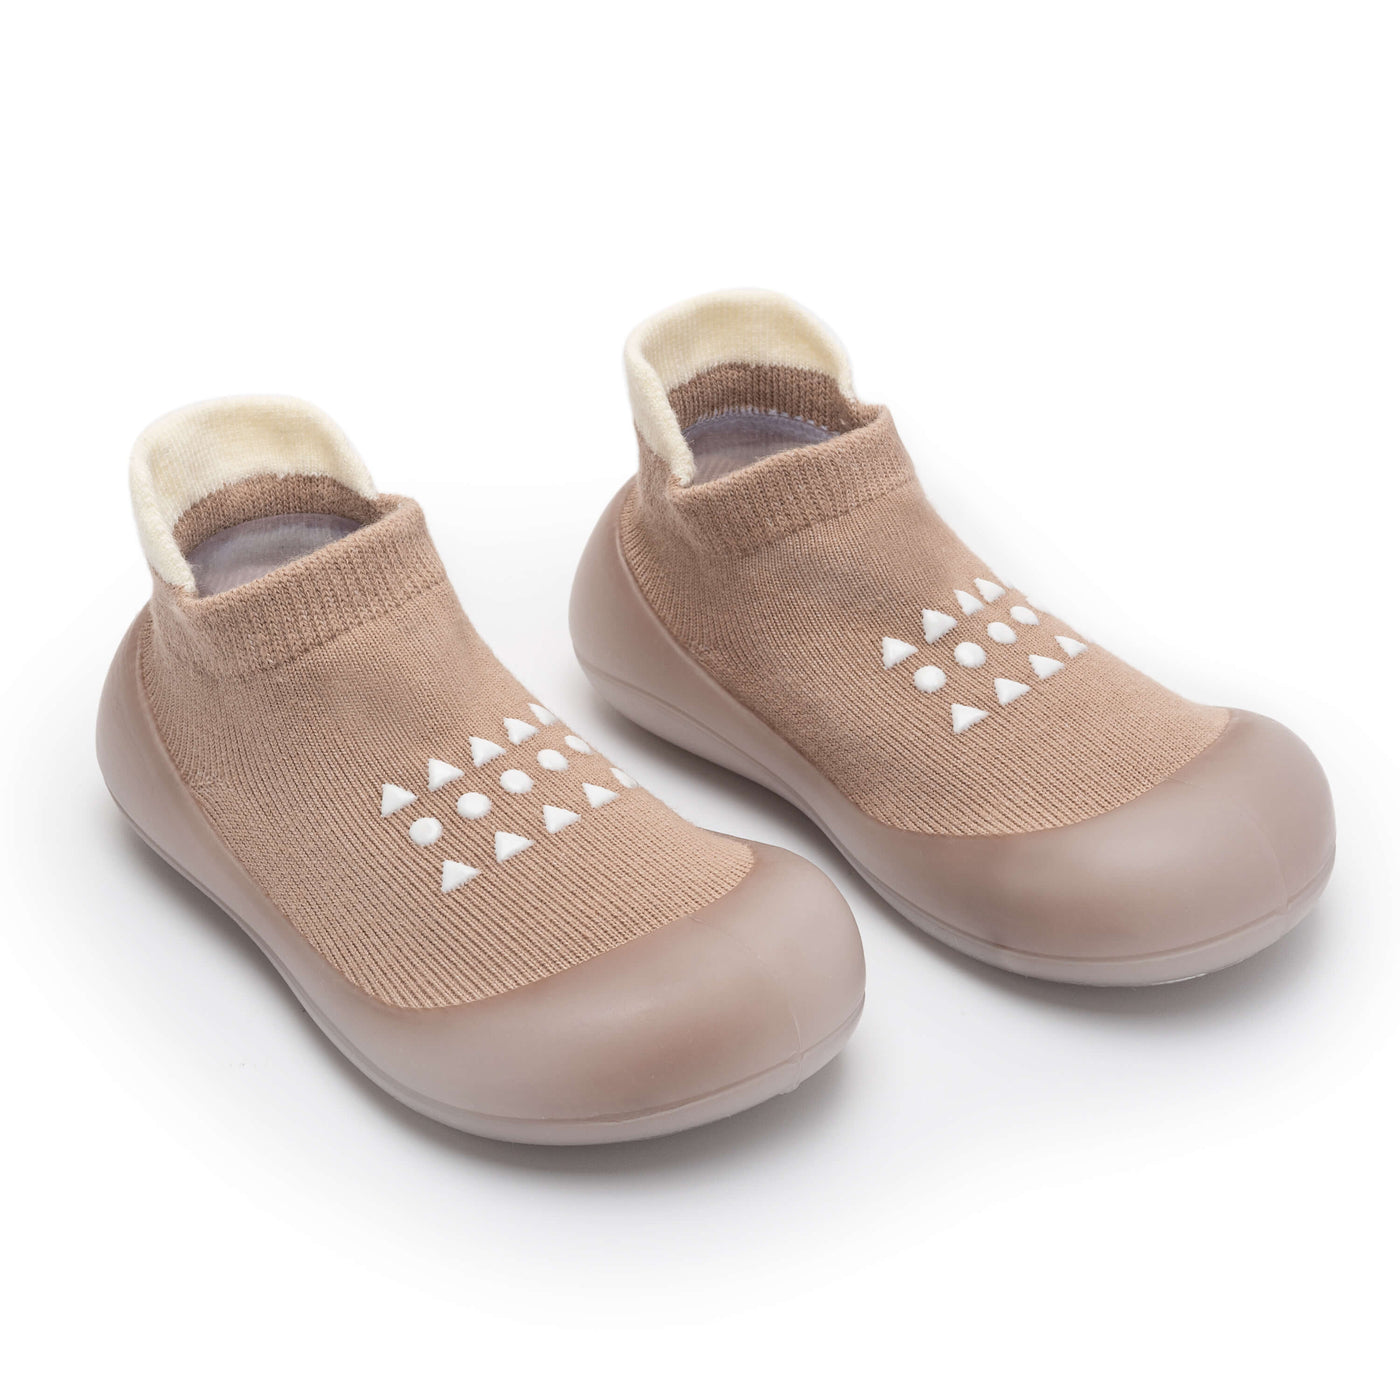 Subtle Shapes - Non-Slip Baby Shoe-Socks